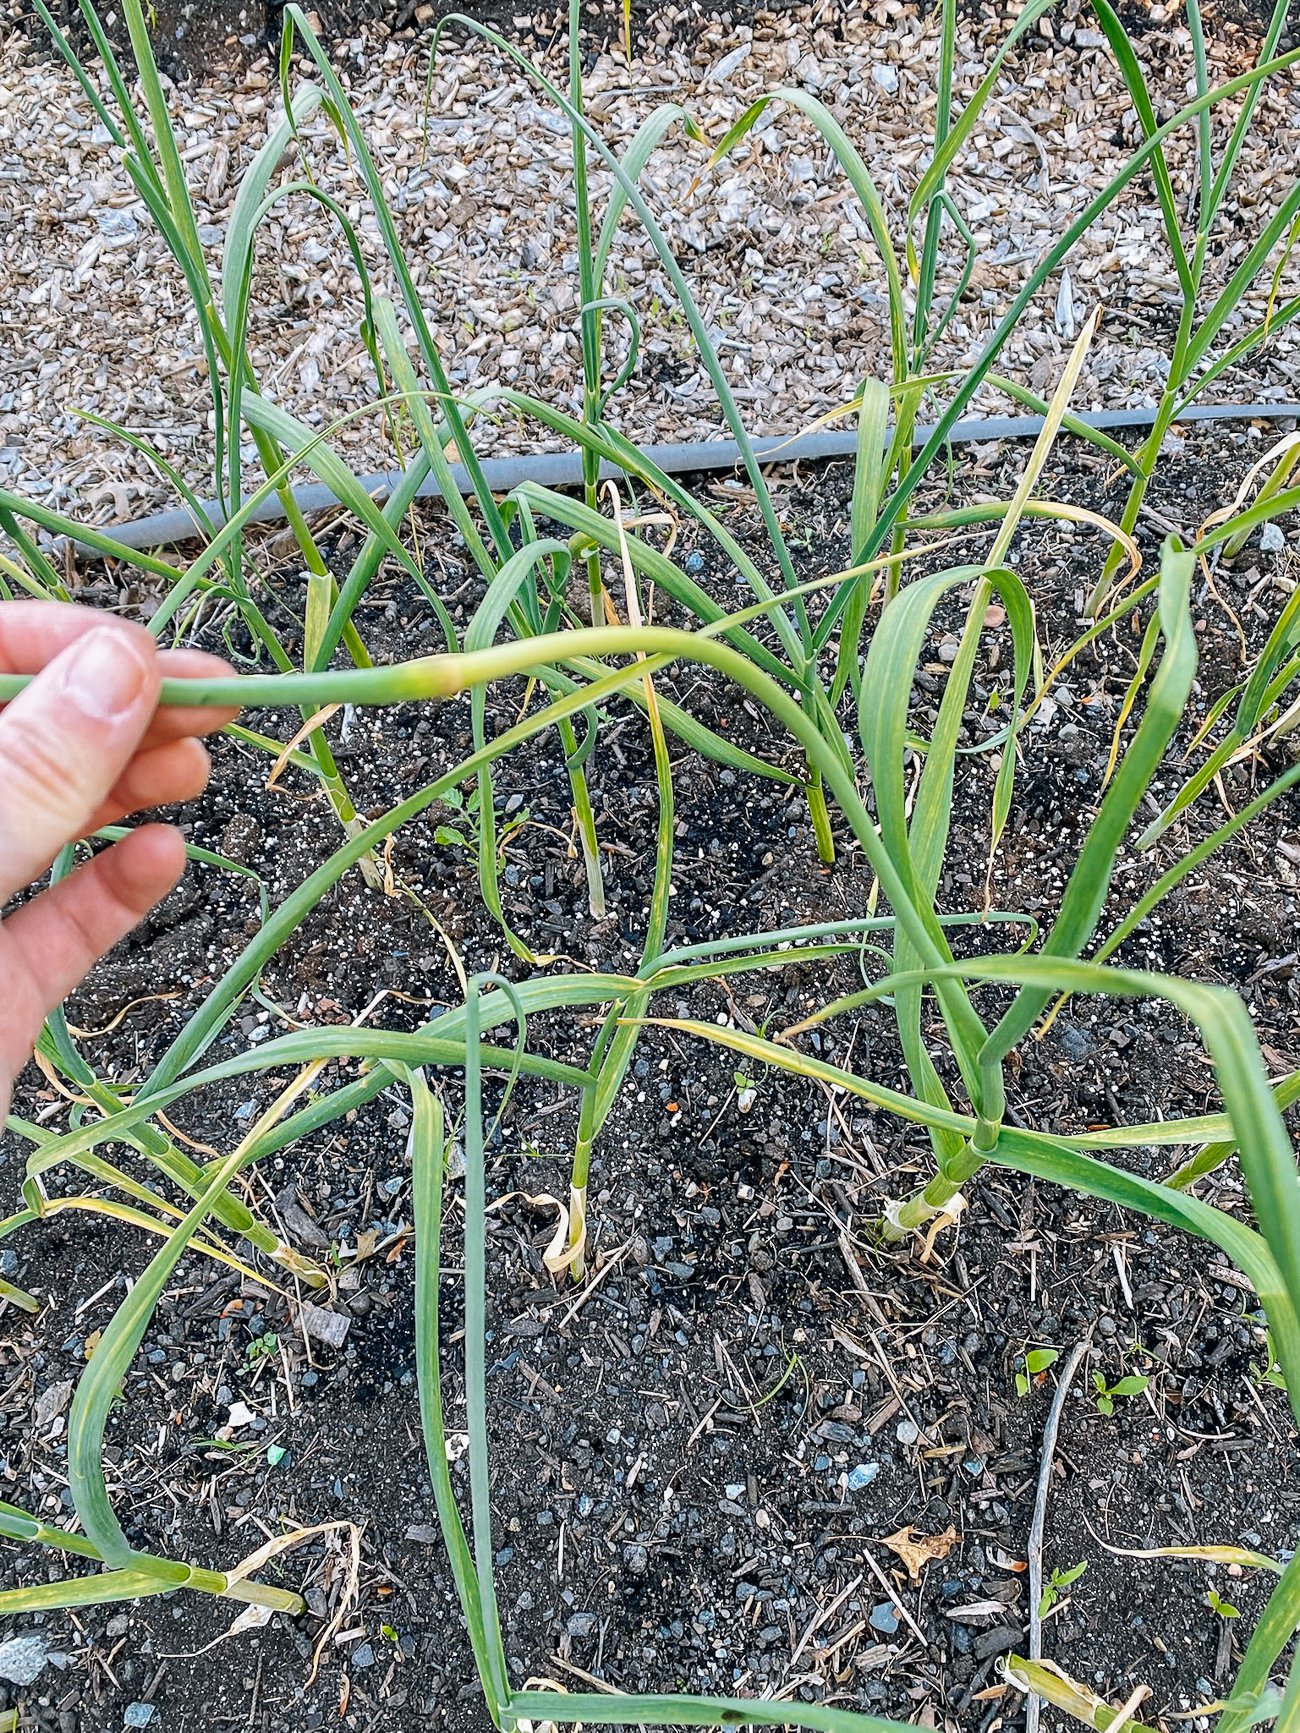 garlic scape on plant